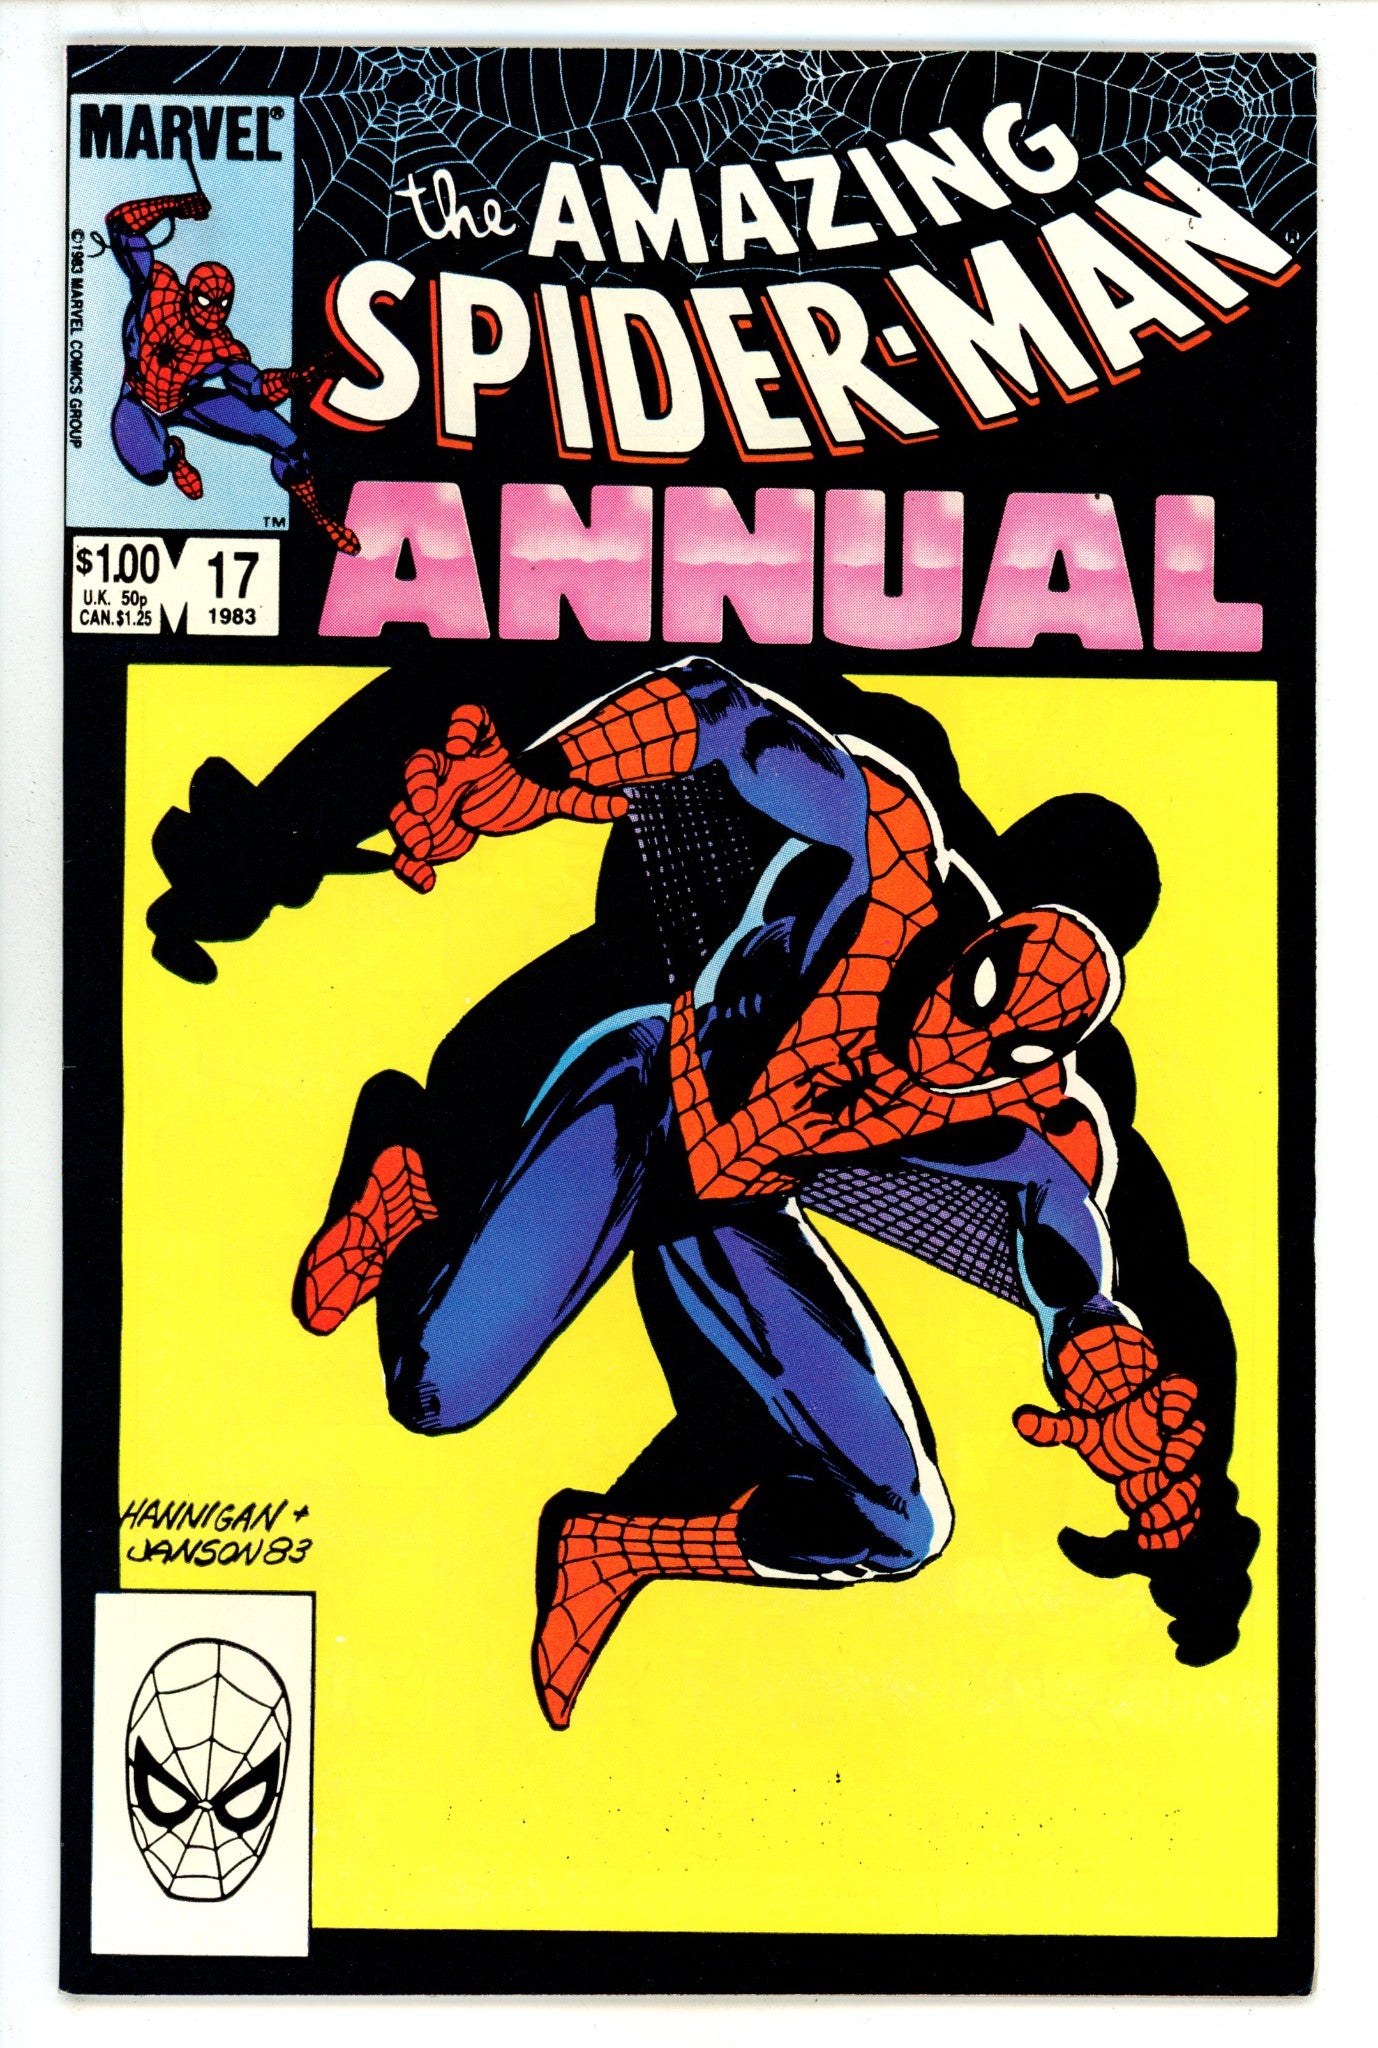 The Amazing Spider-Man Annual Vol 1 17 VF+ (8.5) (1983) 